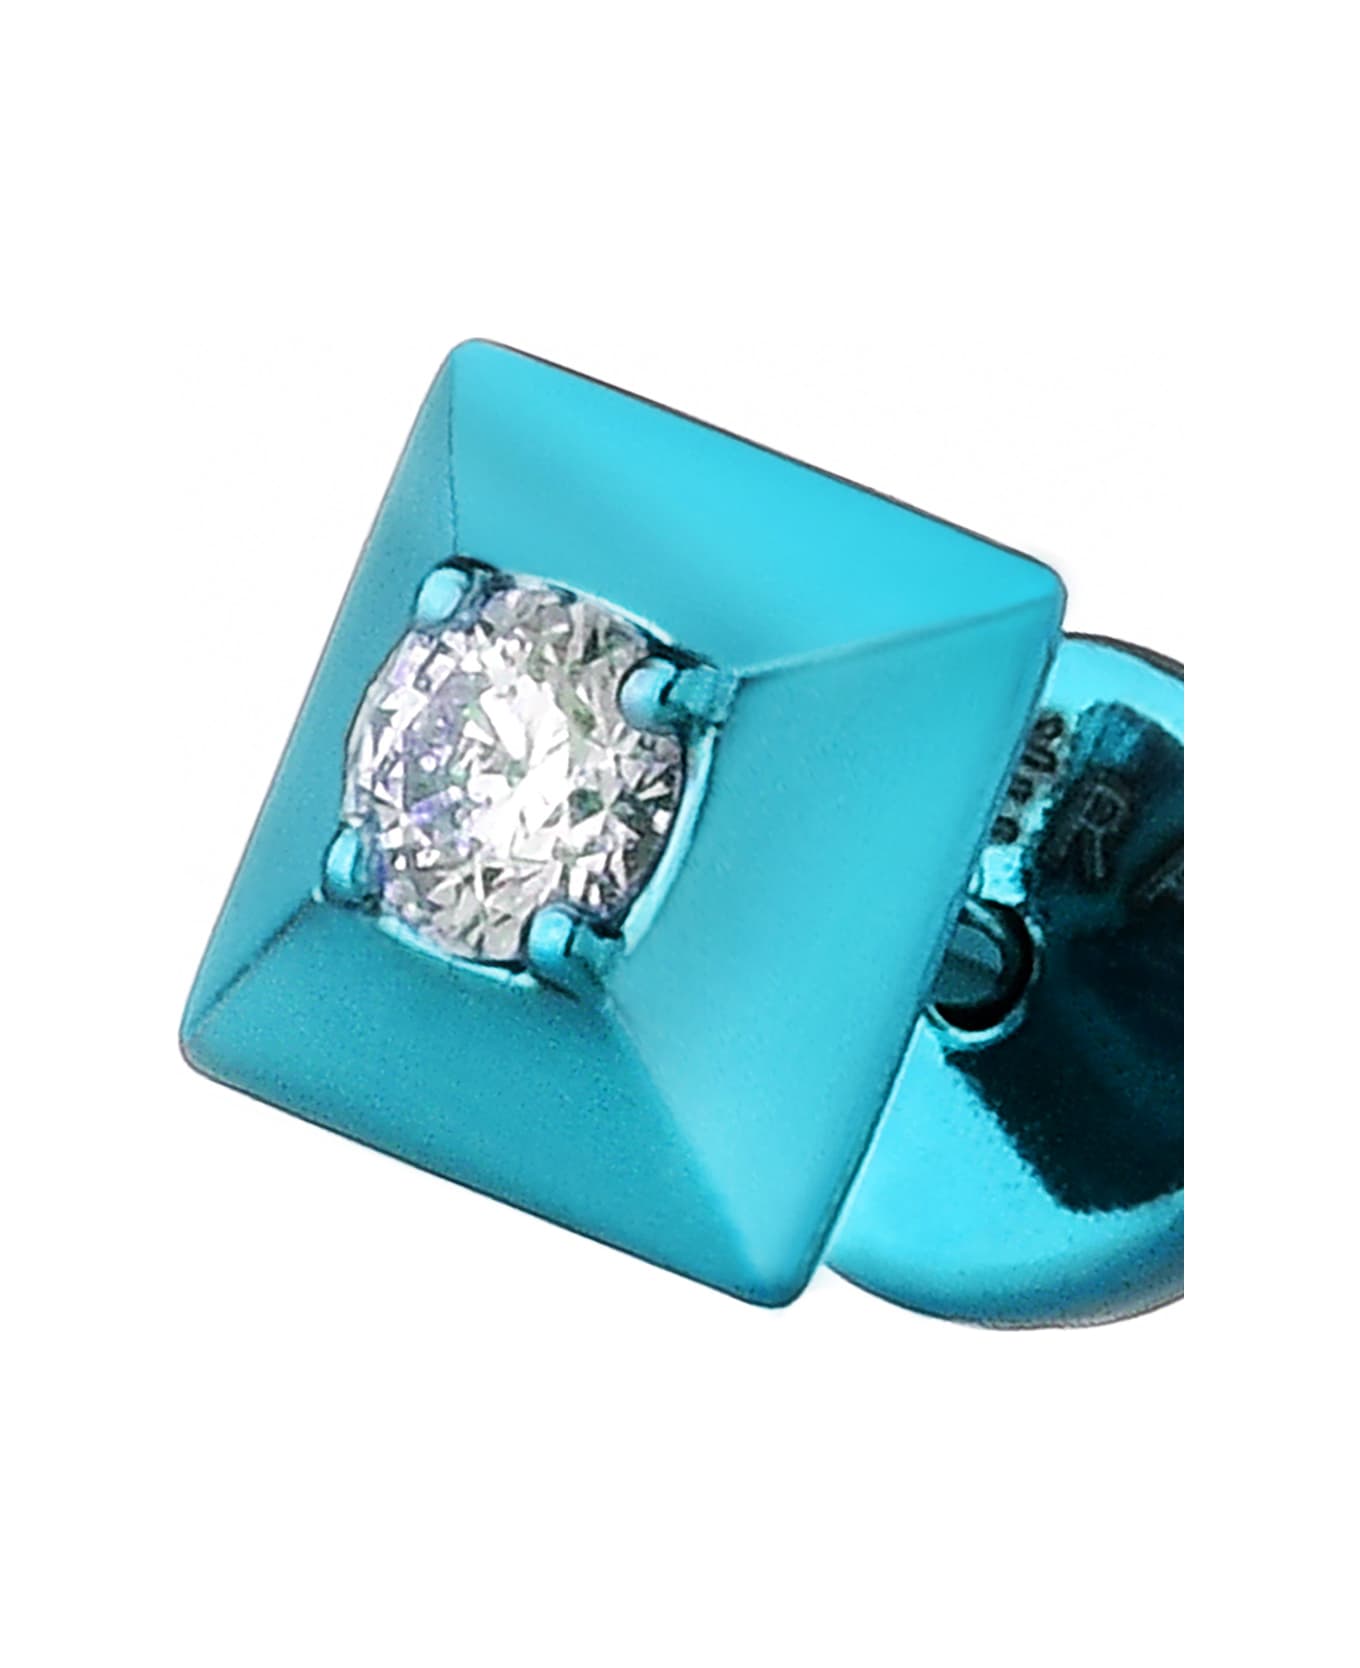 EÉRA Mini Eéra 18k Single Earring With Diamond - LIGHT BLUE (Blue)